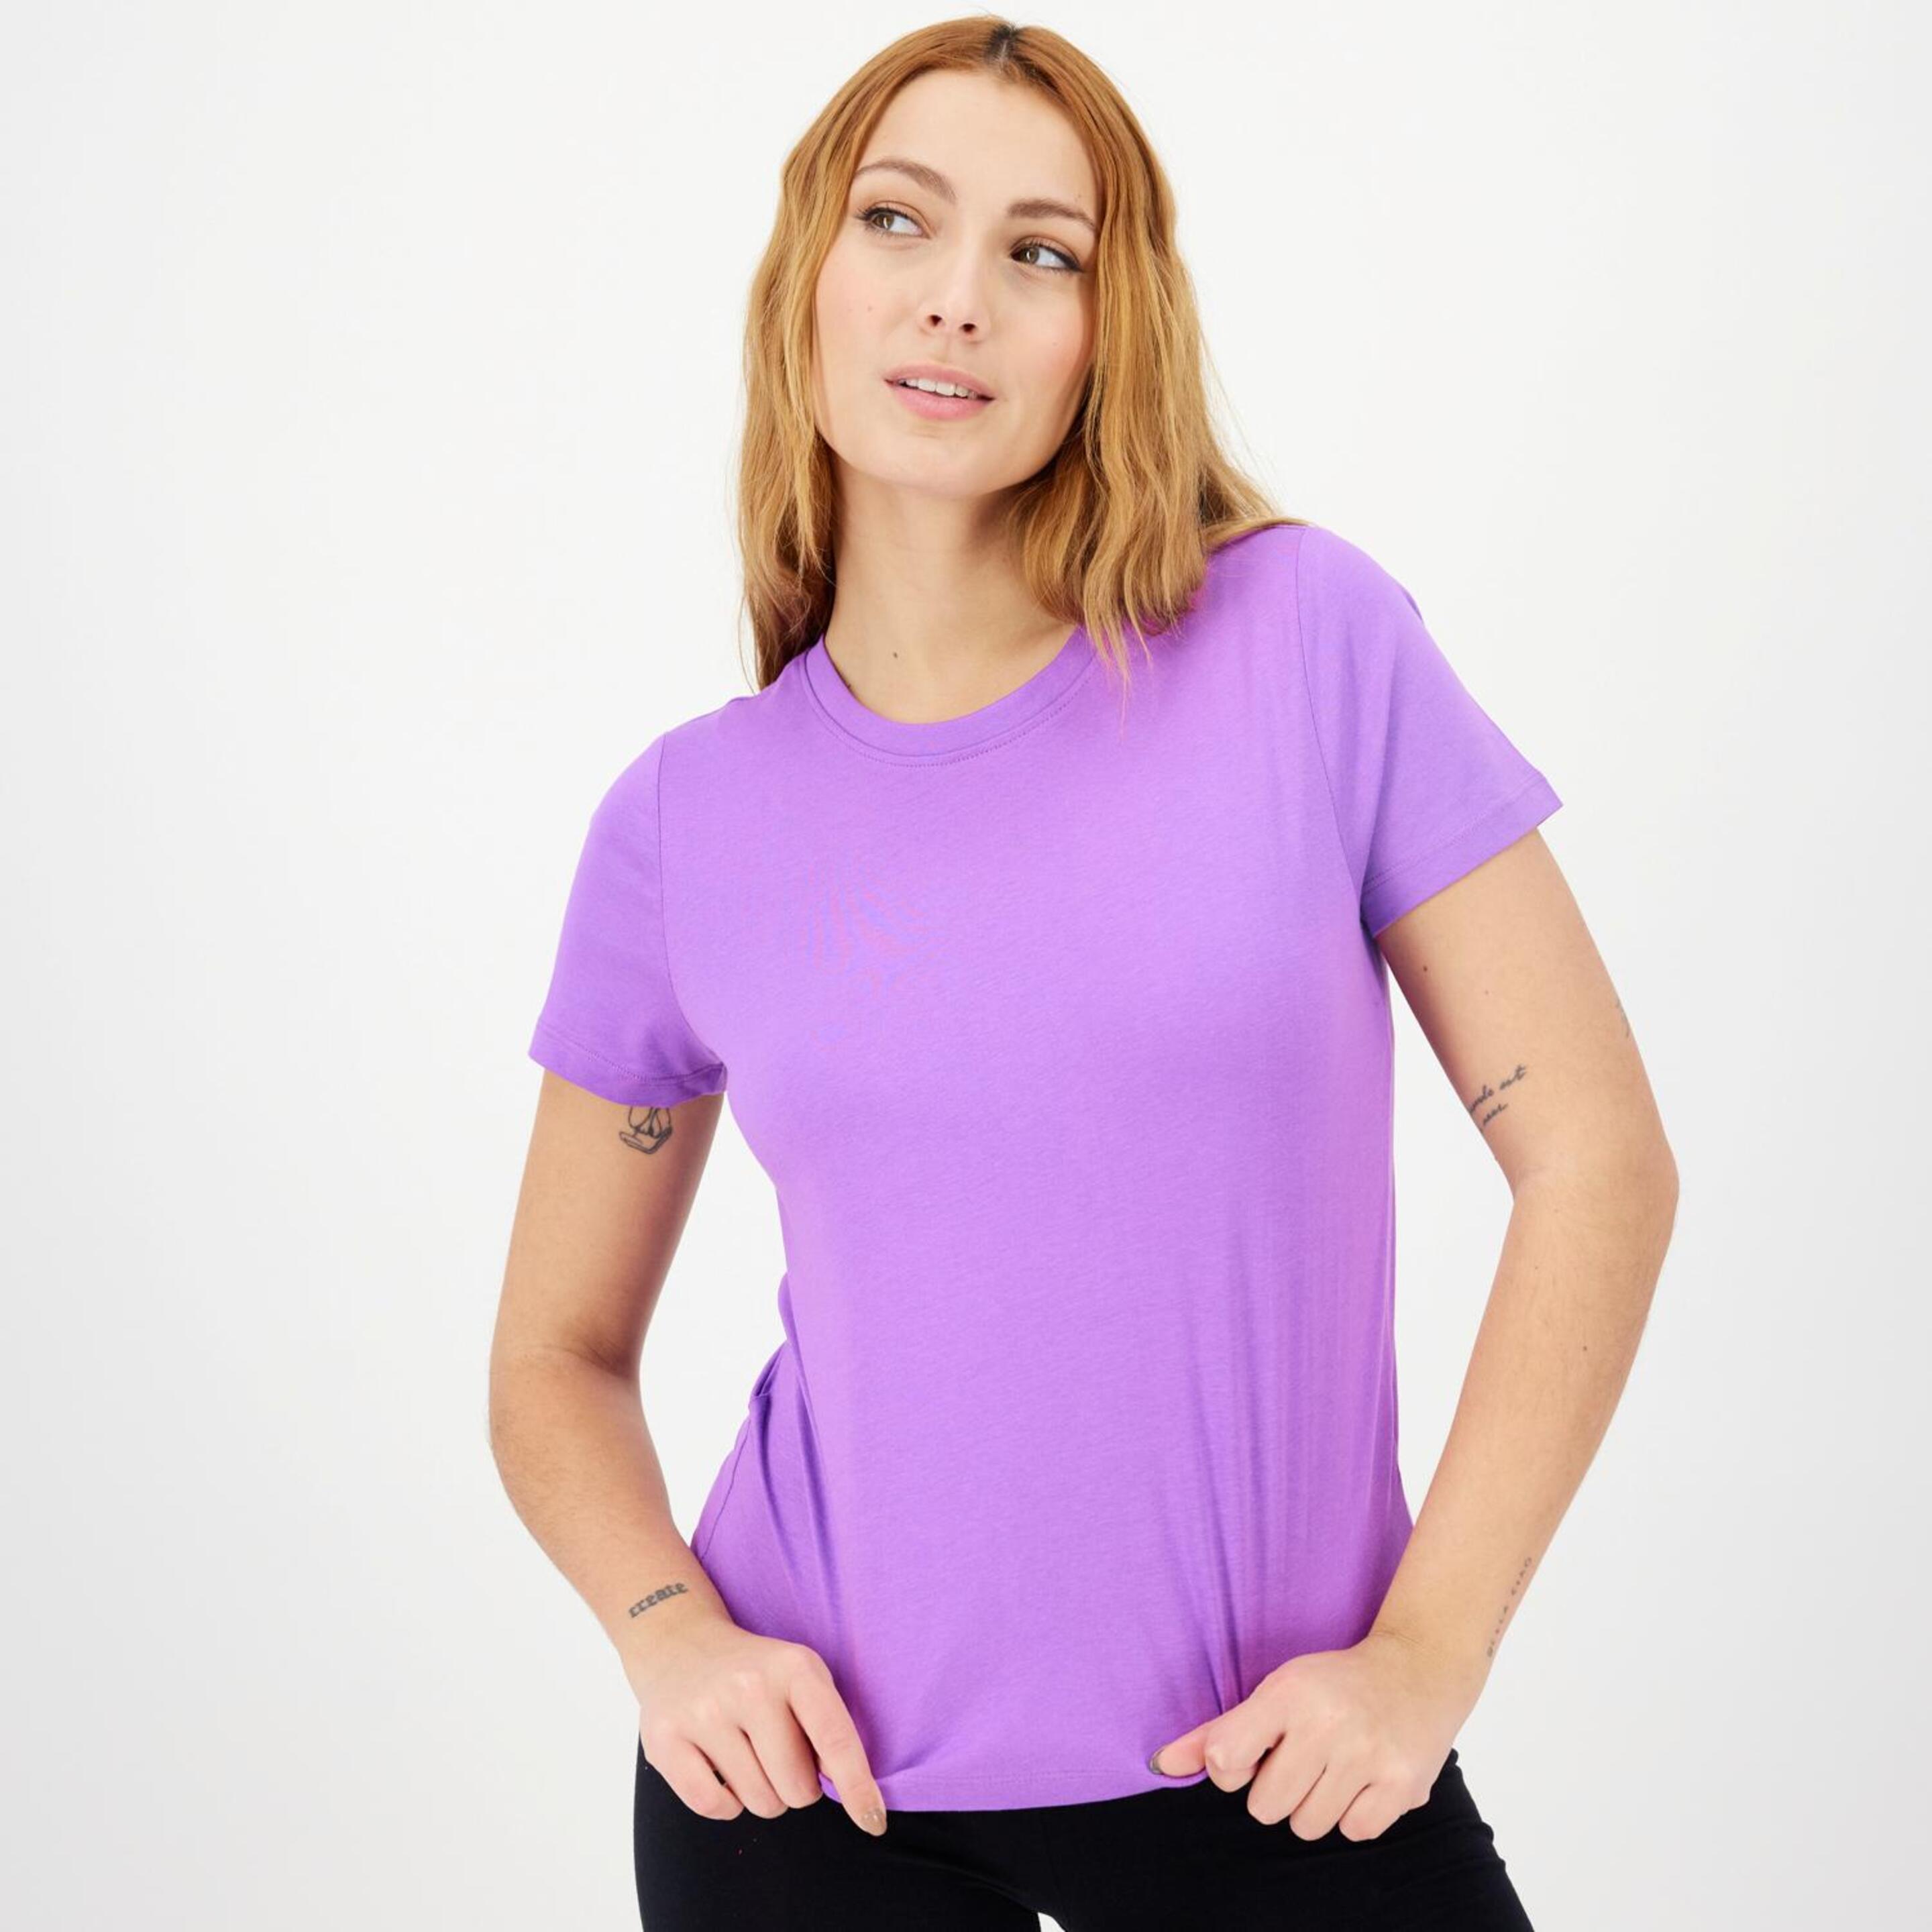 Up Basic - Morado - Camiseta Mujer